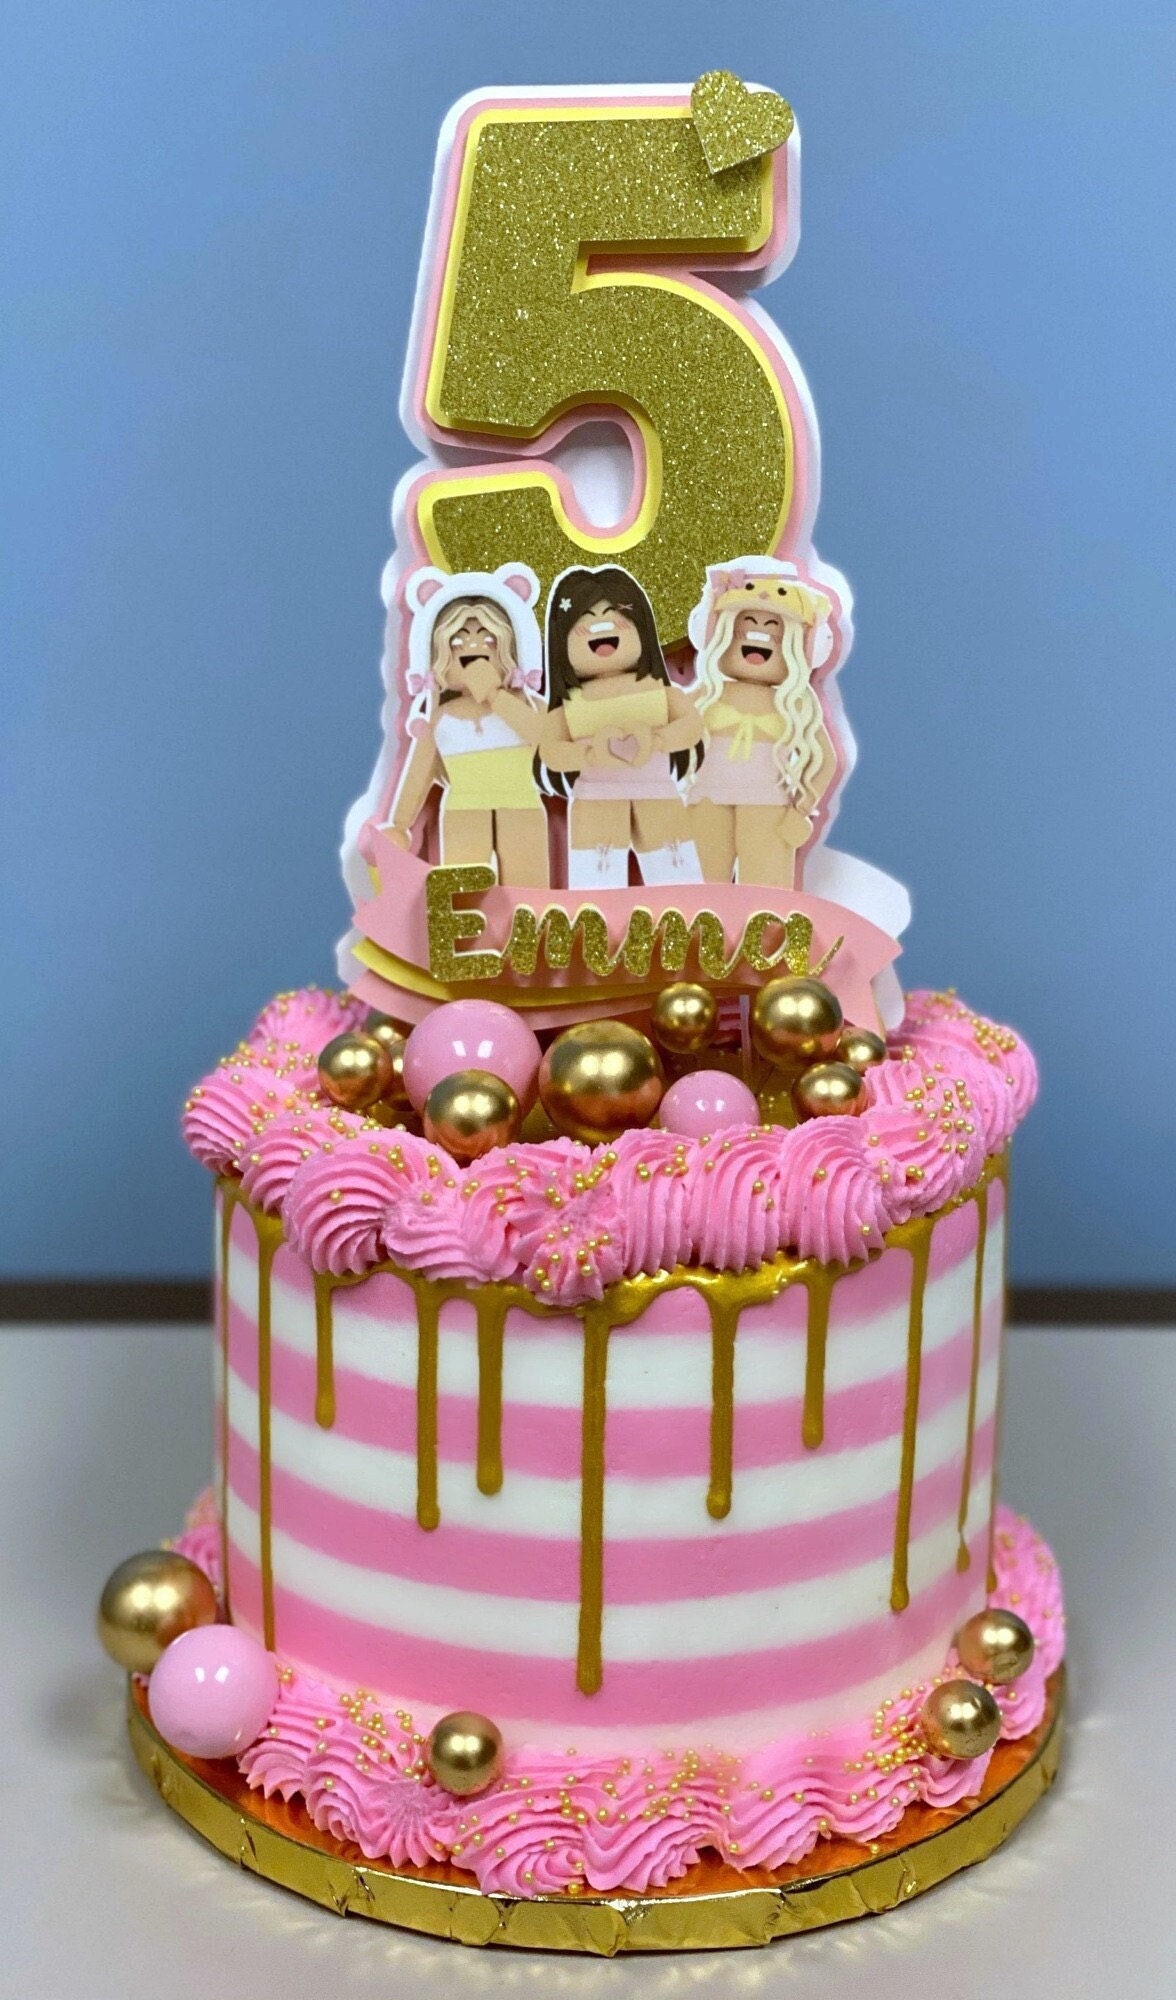 Kake Walker - Roblox cake with the Birthday girl's avatar